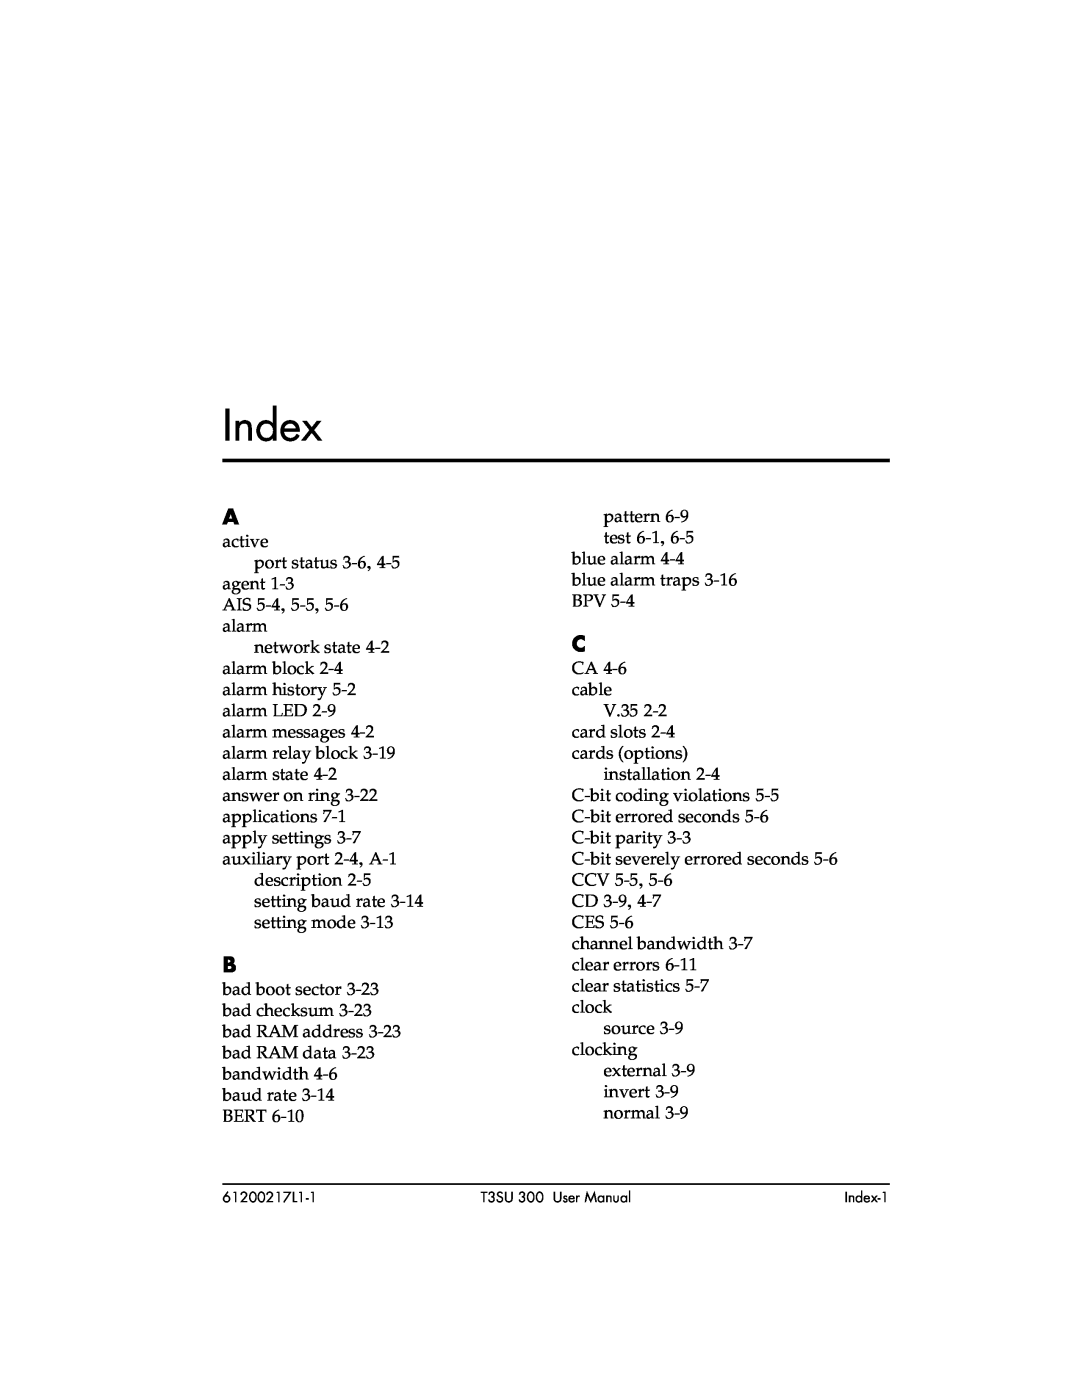 ADTRAN T3SU 300 user manual Index 